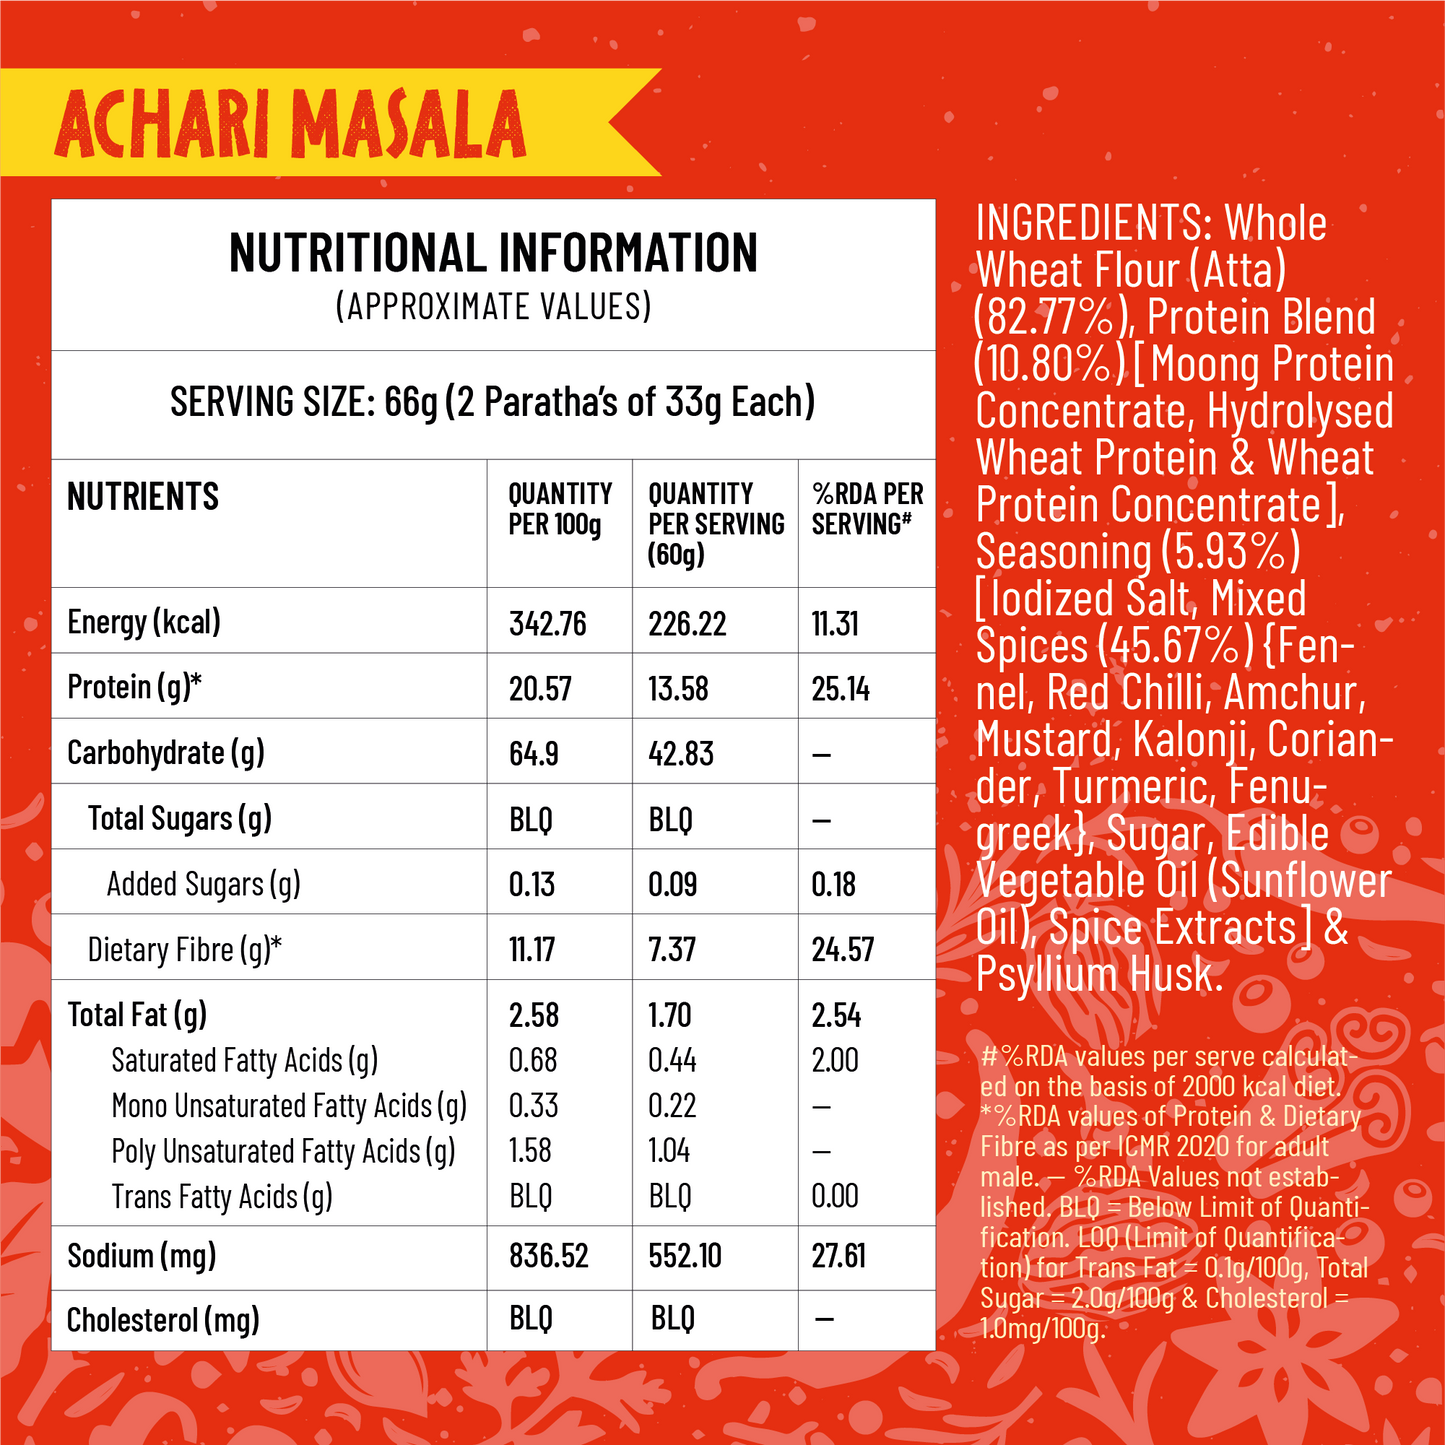 Protein Paratha Mix (Achari Masala)